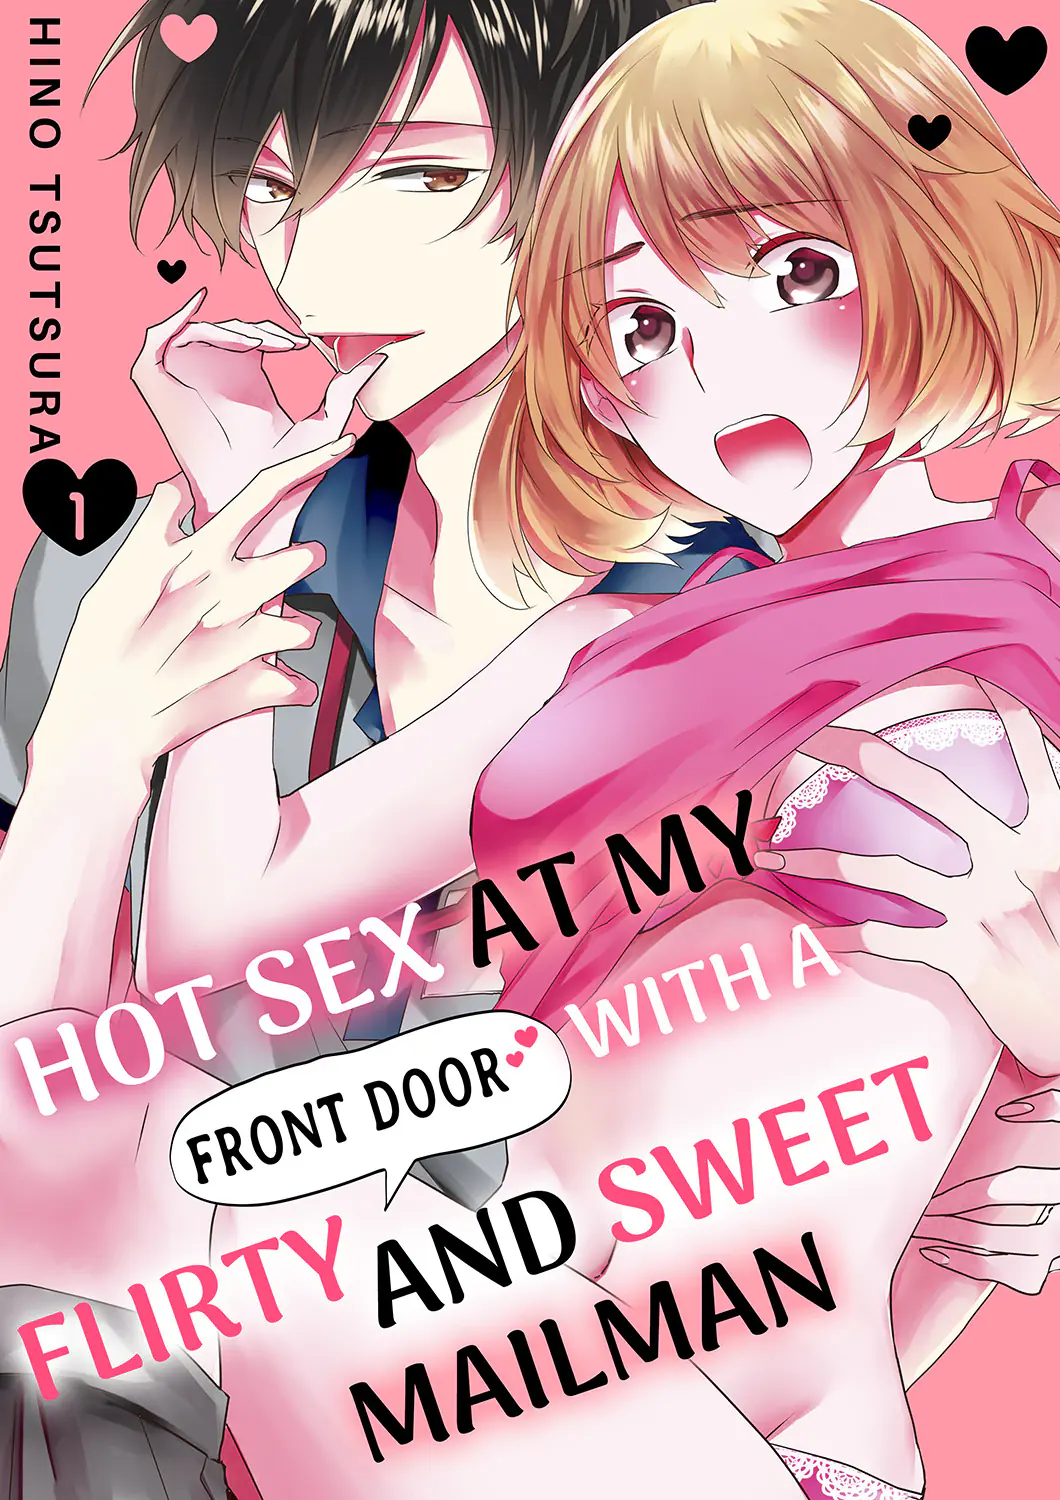 Hot manga